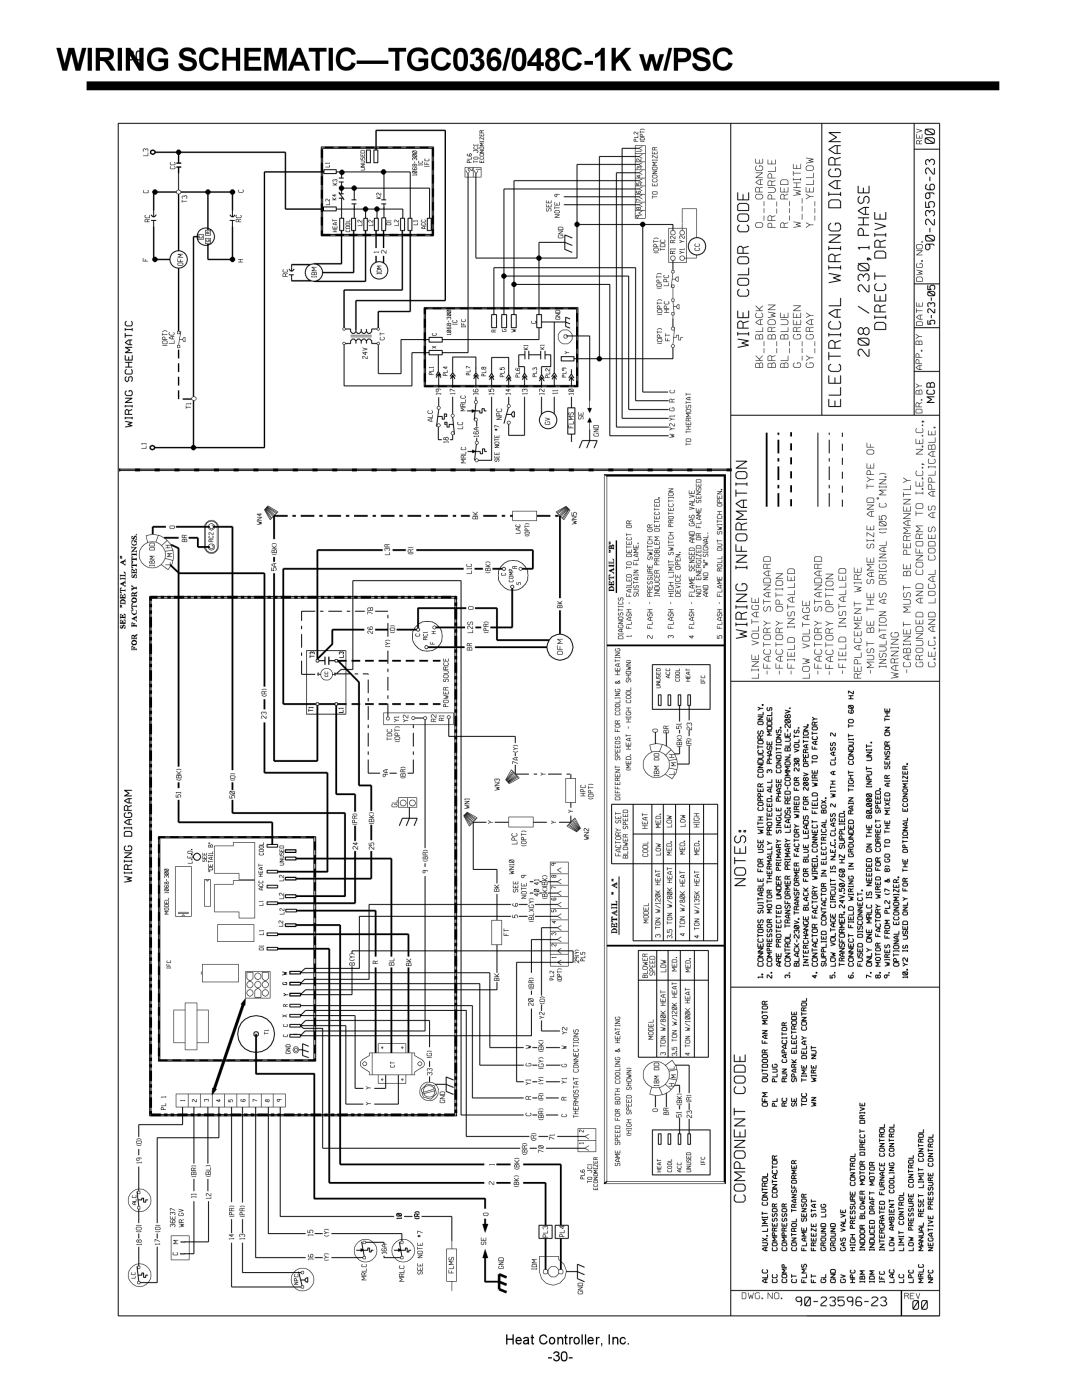 Heat Controller TGC042C-4K-120, TGC060C-4K-135, TGC048C-1K-135 WIRING SCHEMATIC-TGC036/048C-1Kw/PSC, Heat Controller, Inc 